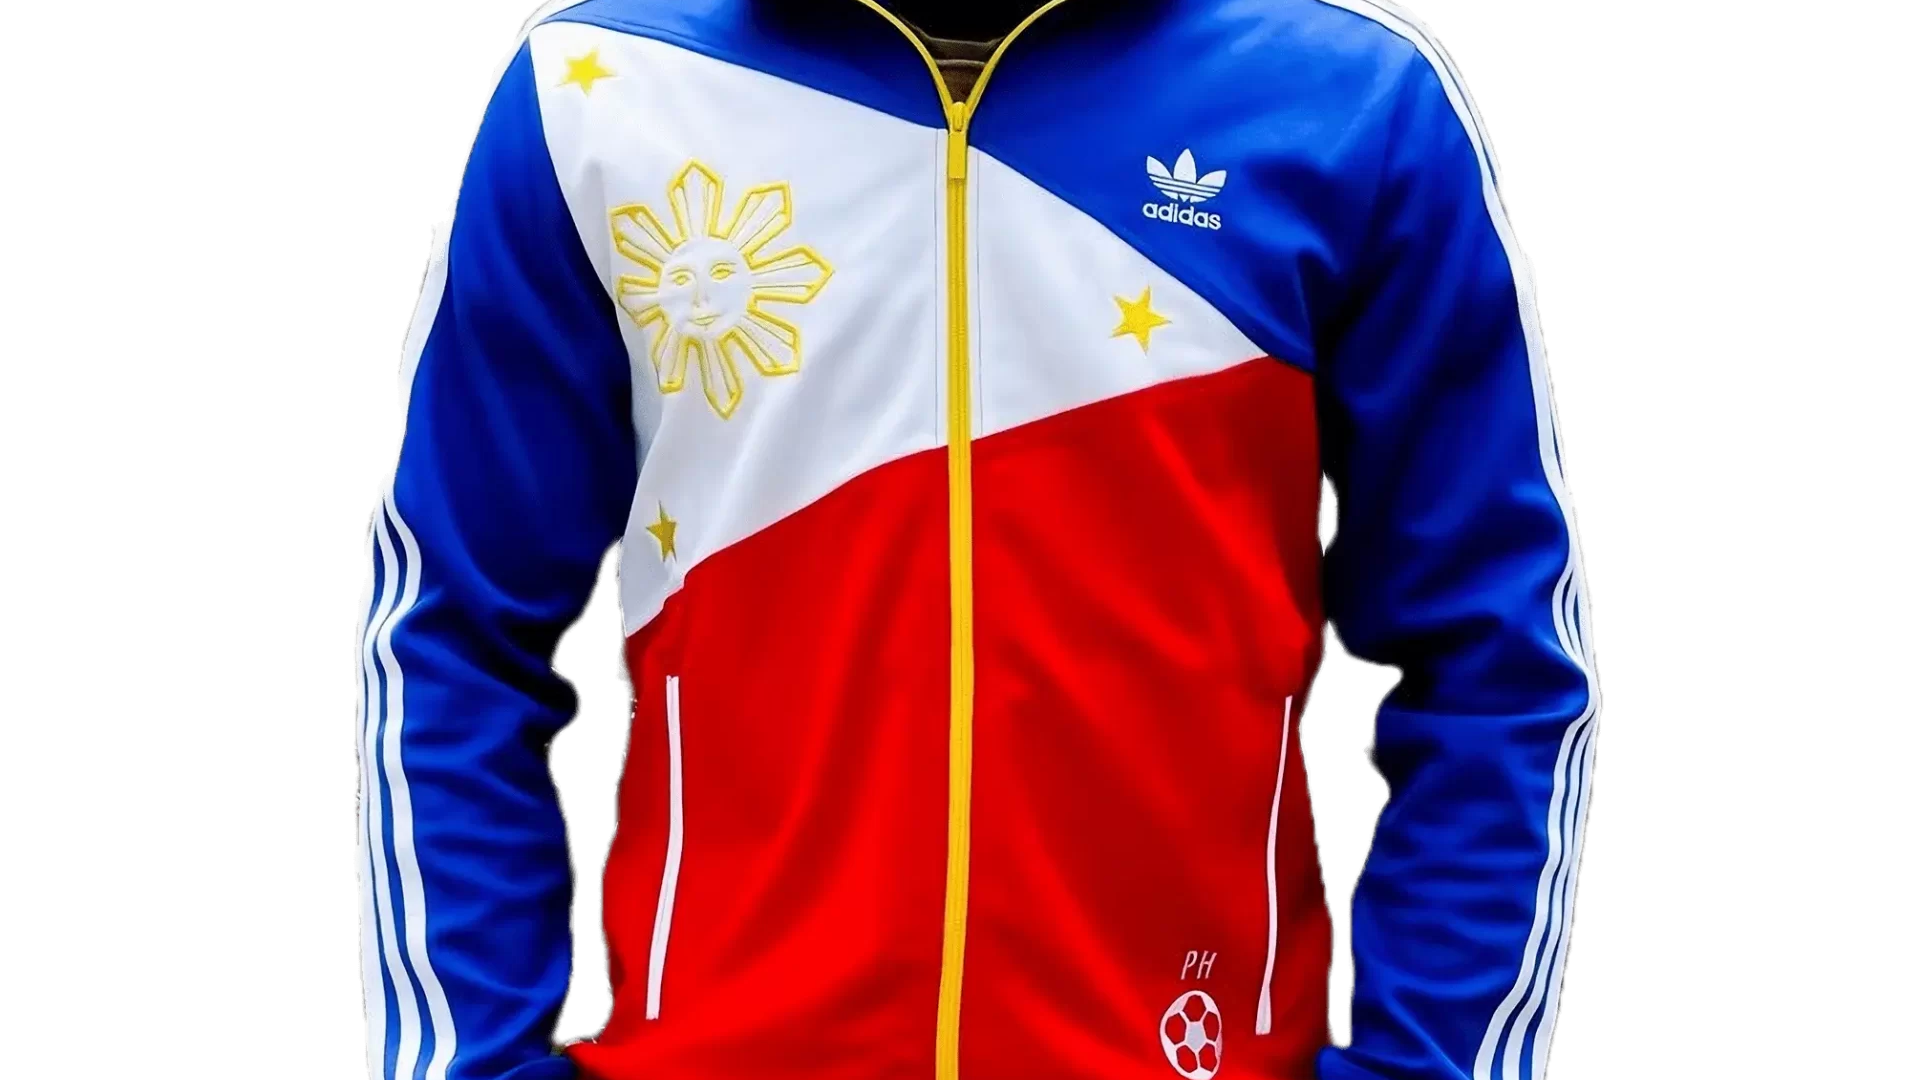 Men's 2010 Philippines TT by Adidas Originals: Magnificent (EnLawded.com file #lmchk48271ip2y122416kg9st)